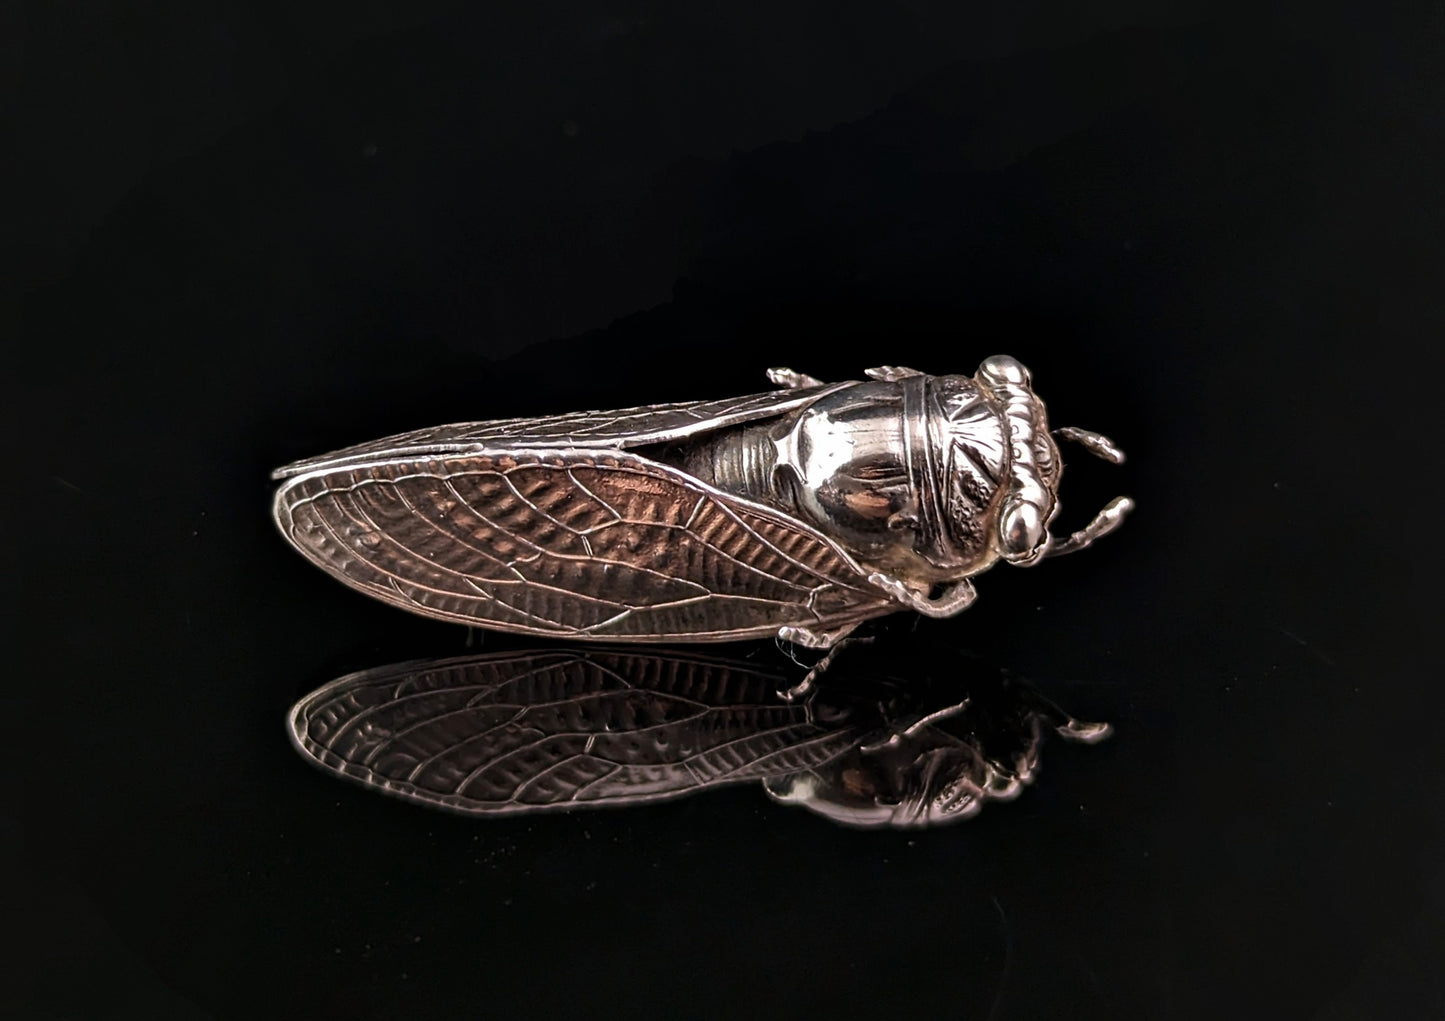 Antique French silver cicada brooch, Art Nouveau